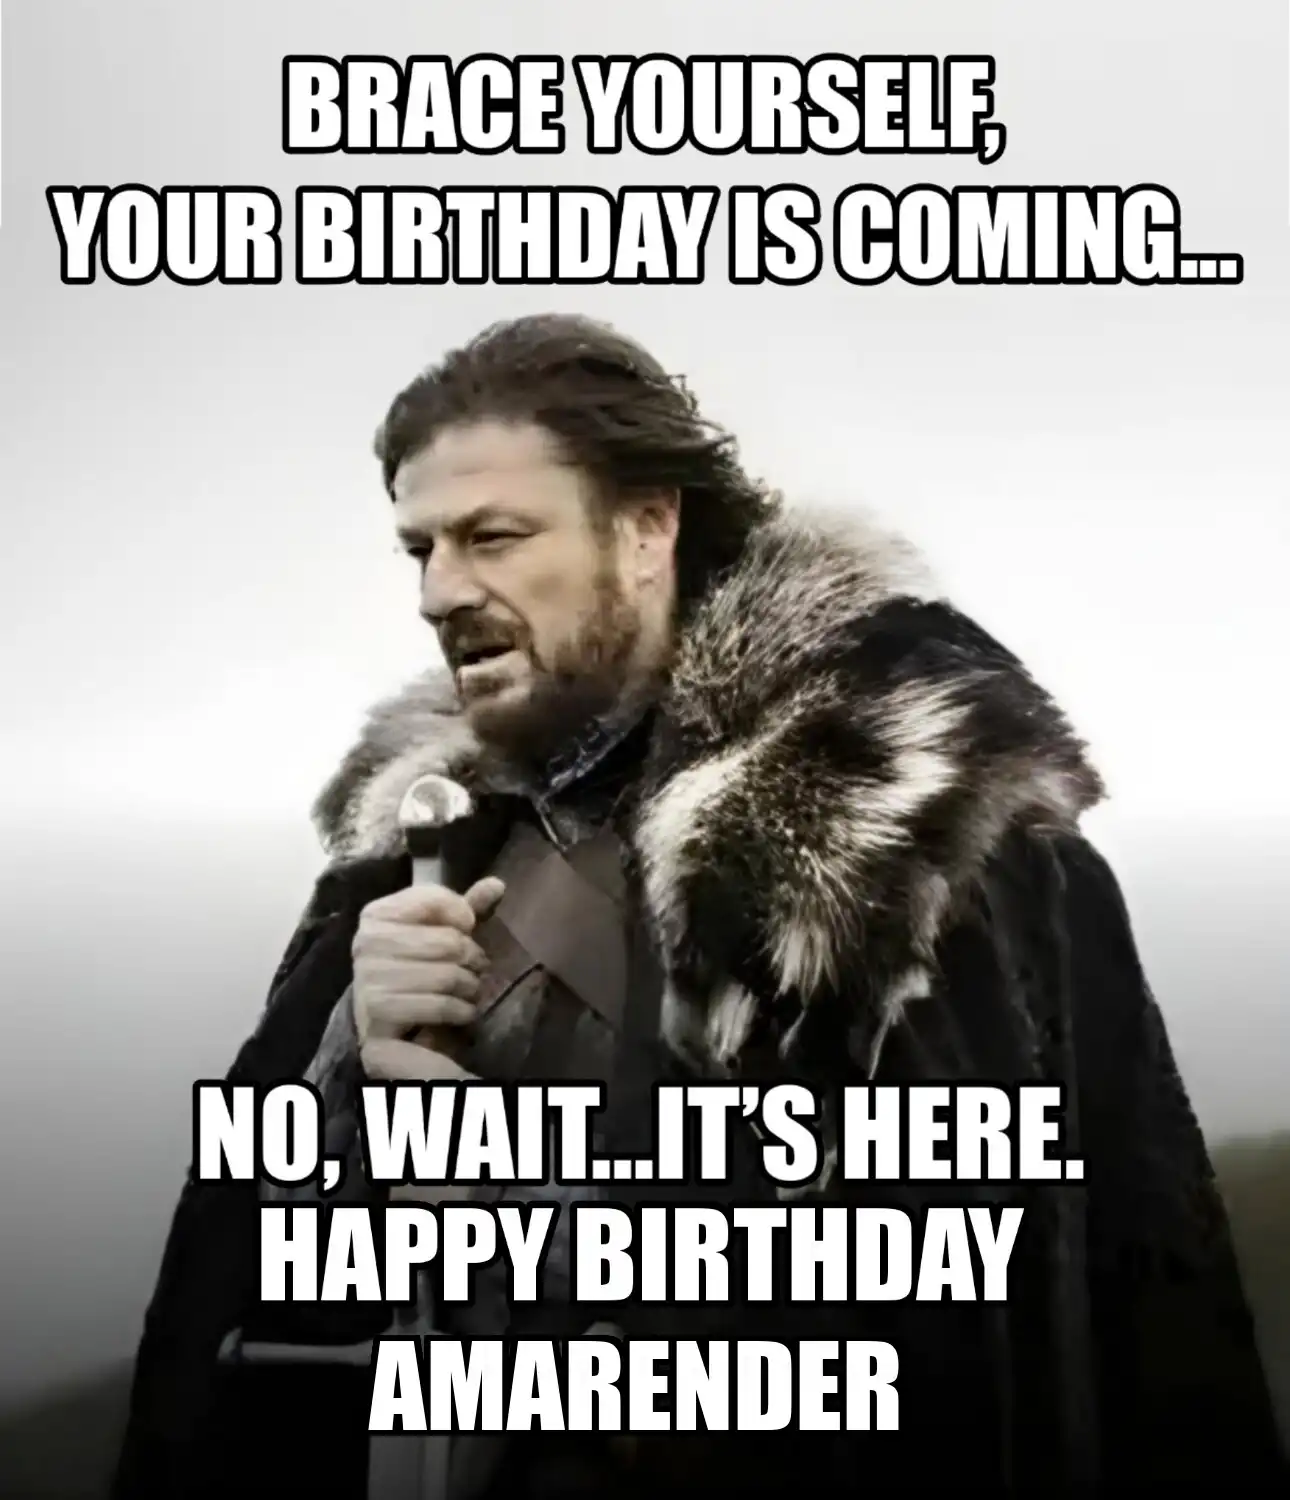 Happy Birthday Amarender Brace Yourself Your Birthday Is Coming Meme